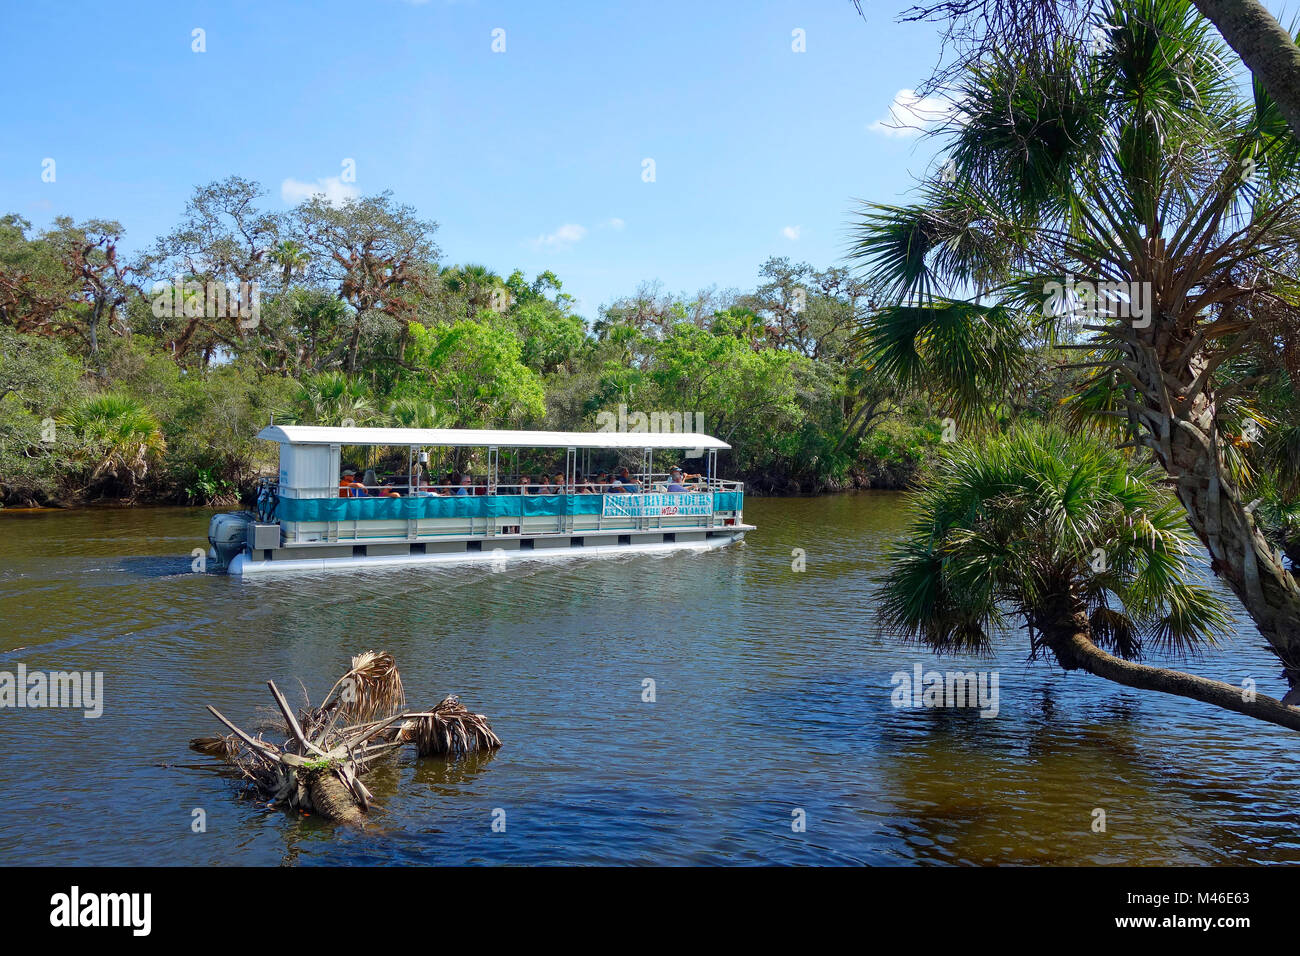 Un tour in barca sul Wild Myakka River, Southwest Florida, Stati Uniti d'America Foto Stock